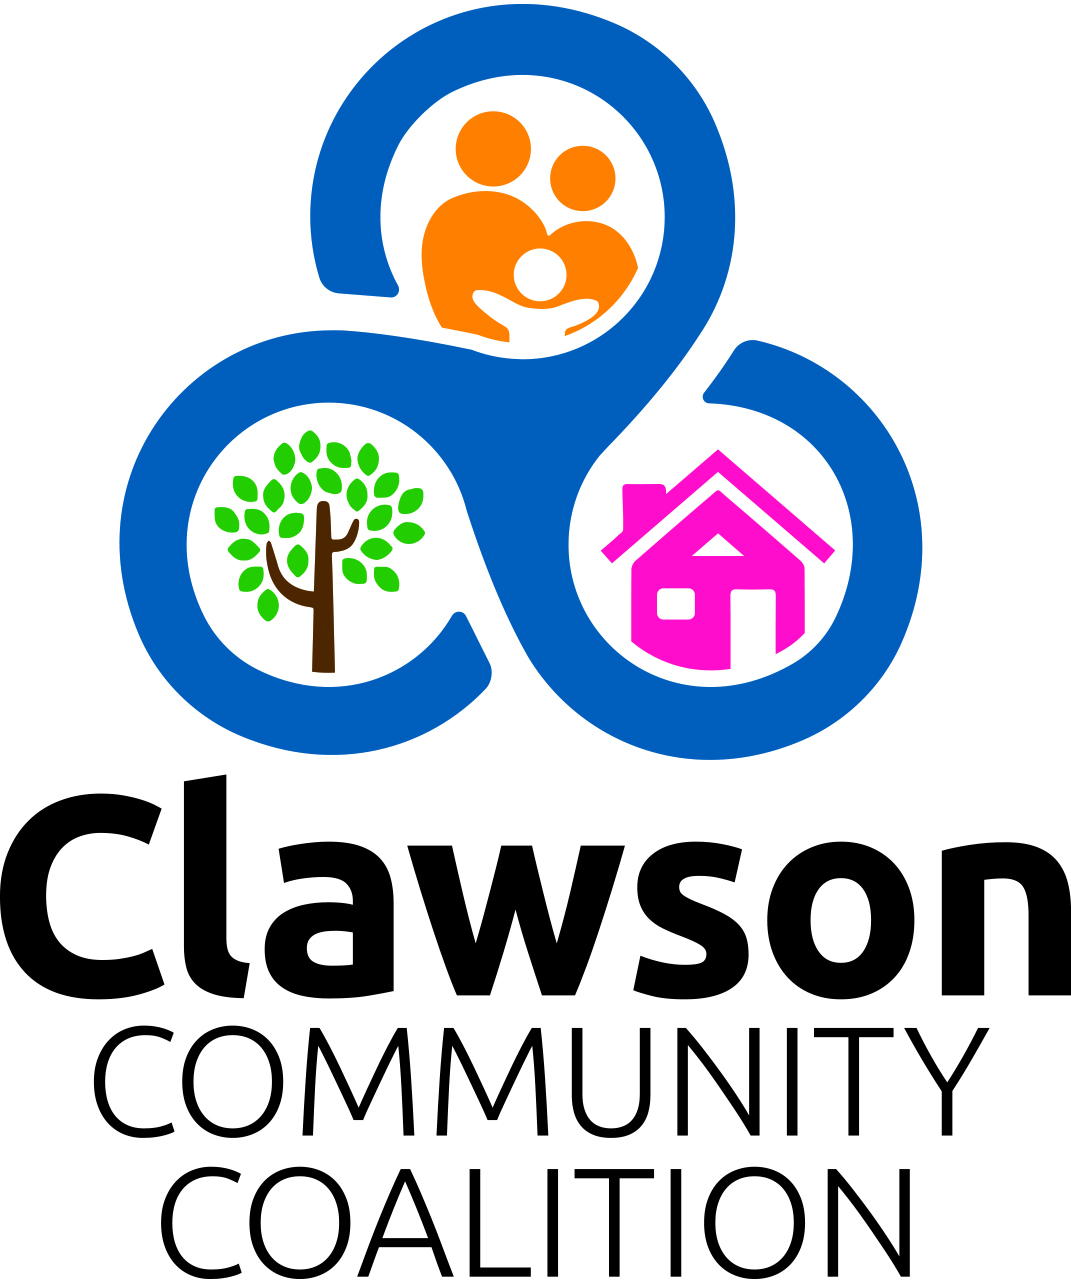 Clawson Community Coalition